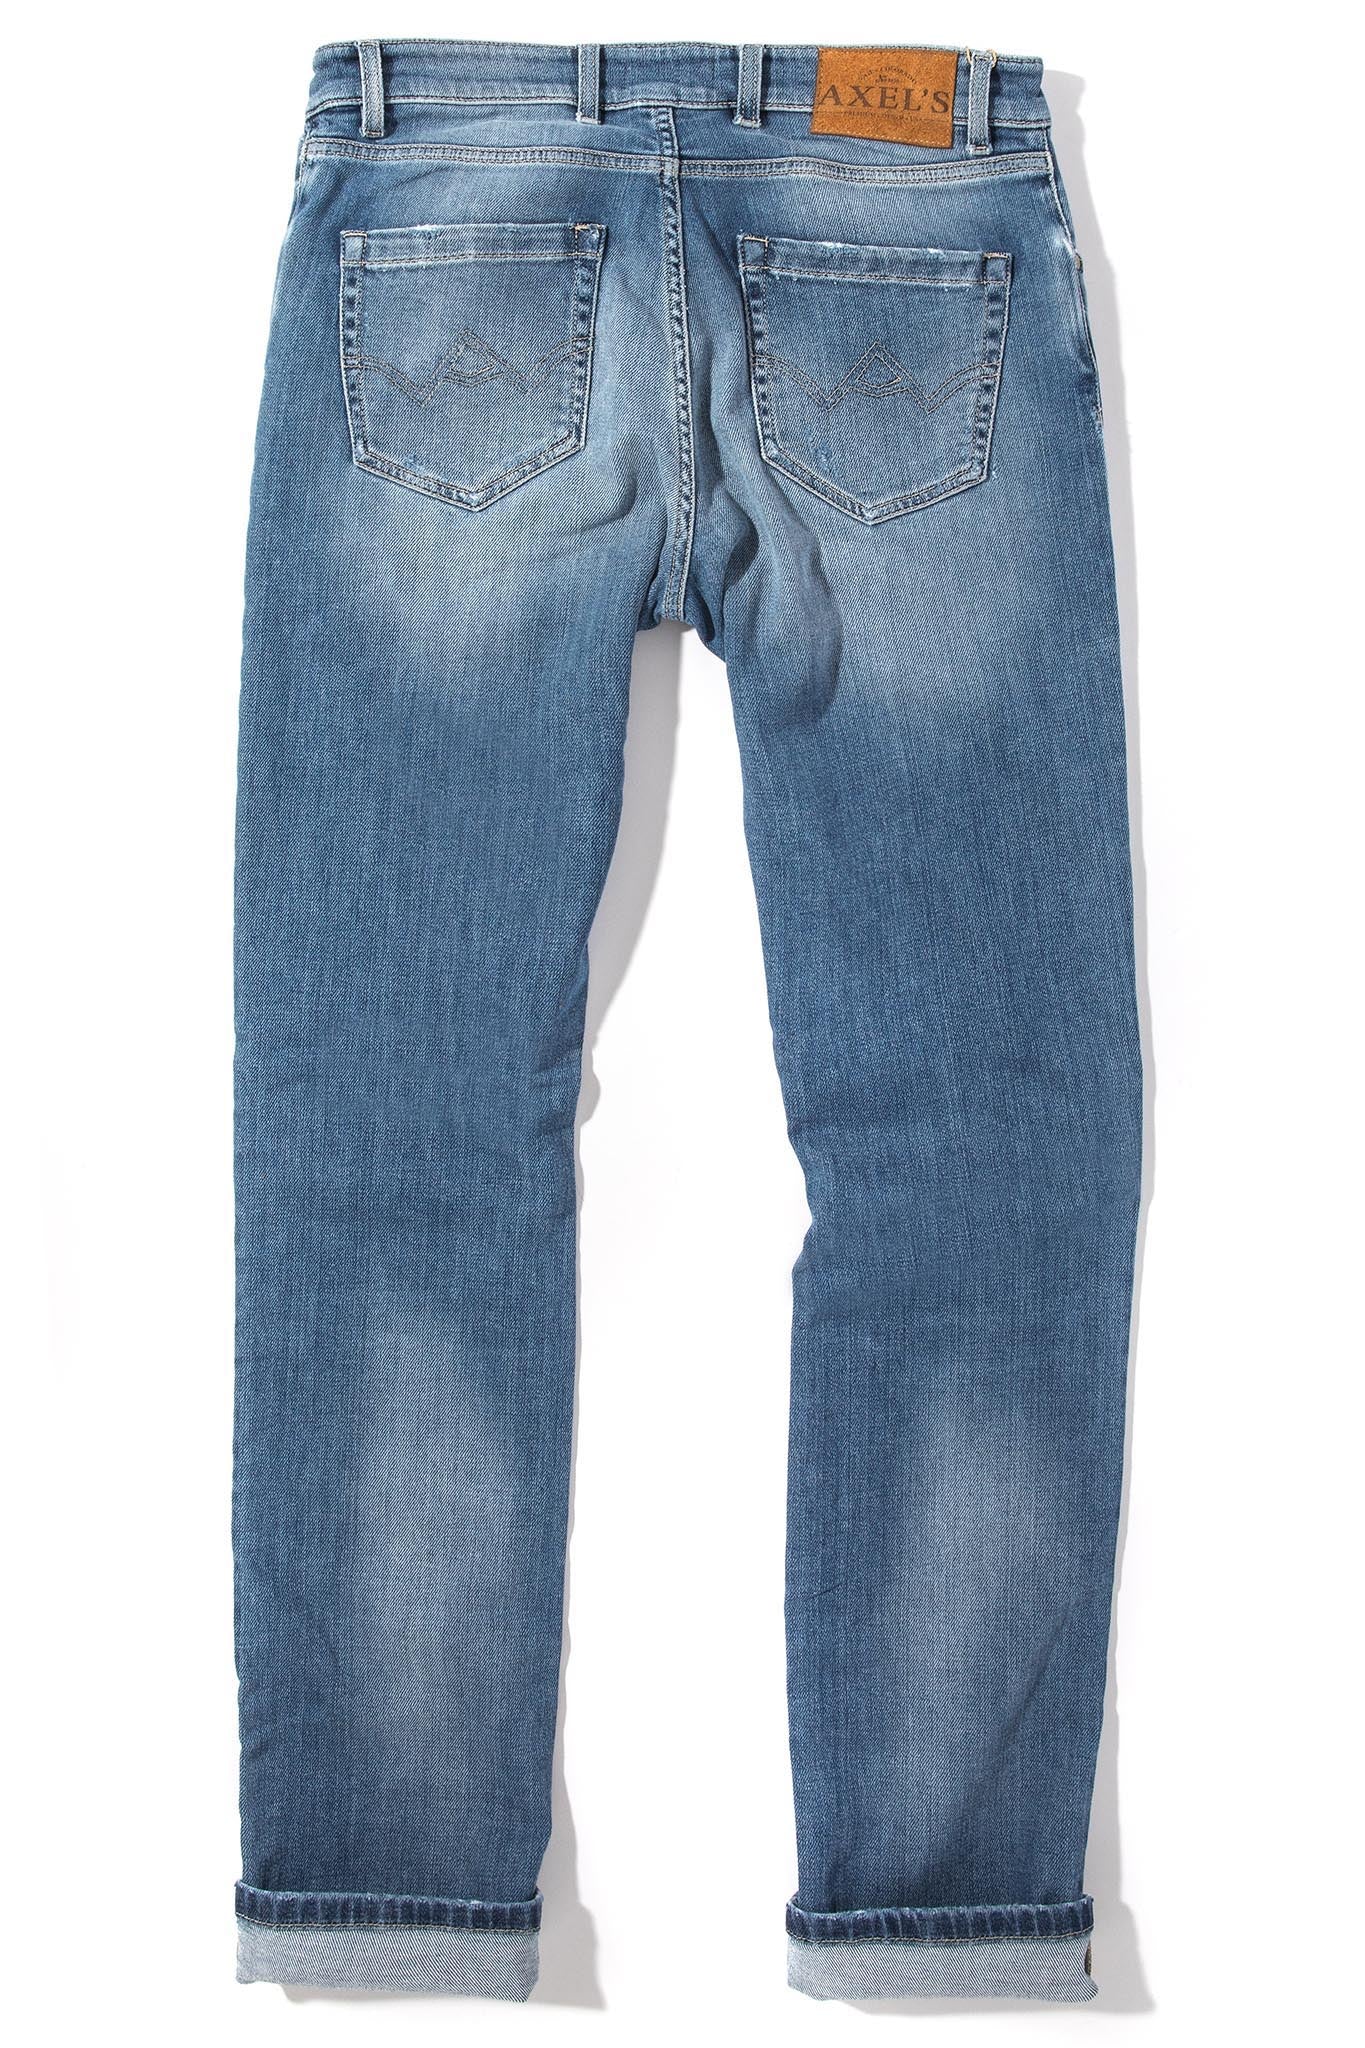 Axel's Scottsdale Distressed Jean | Mens - Pants - 5 Pocket | Axels Premium Denim